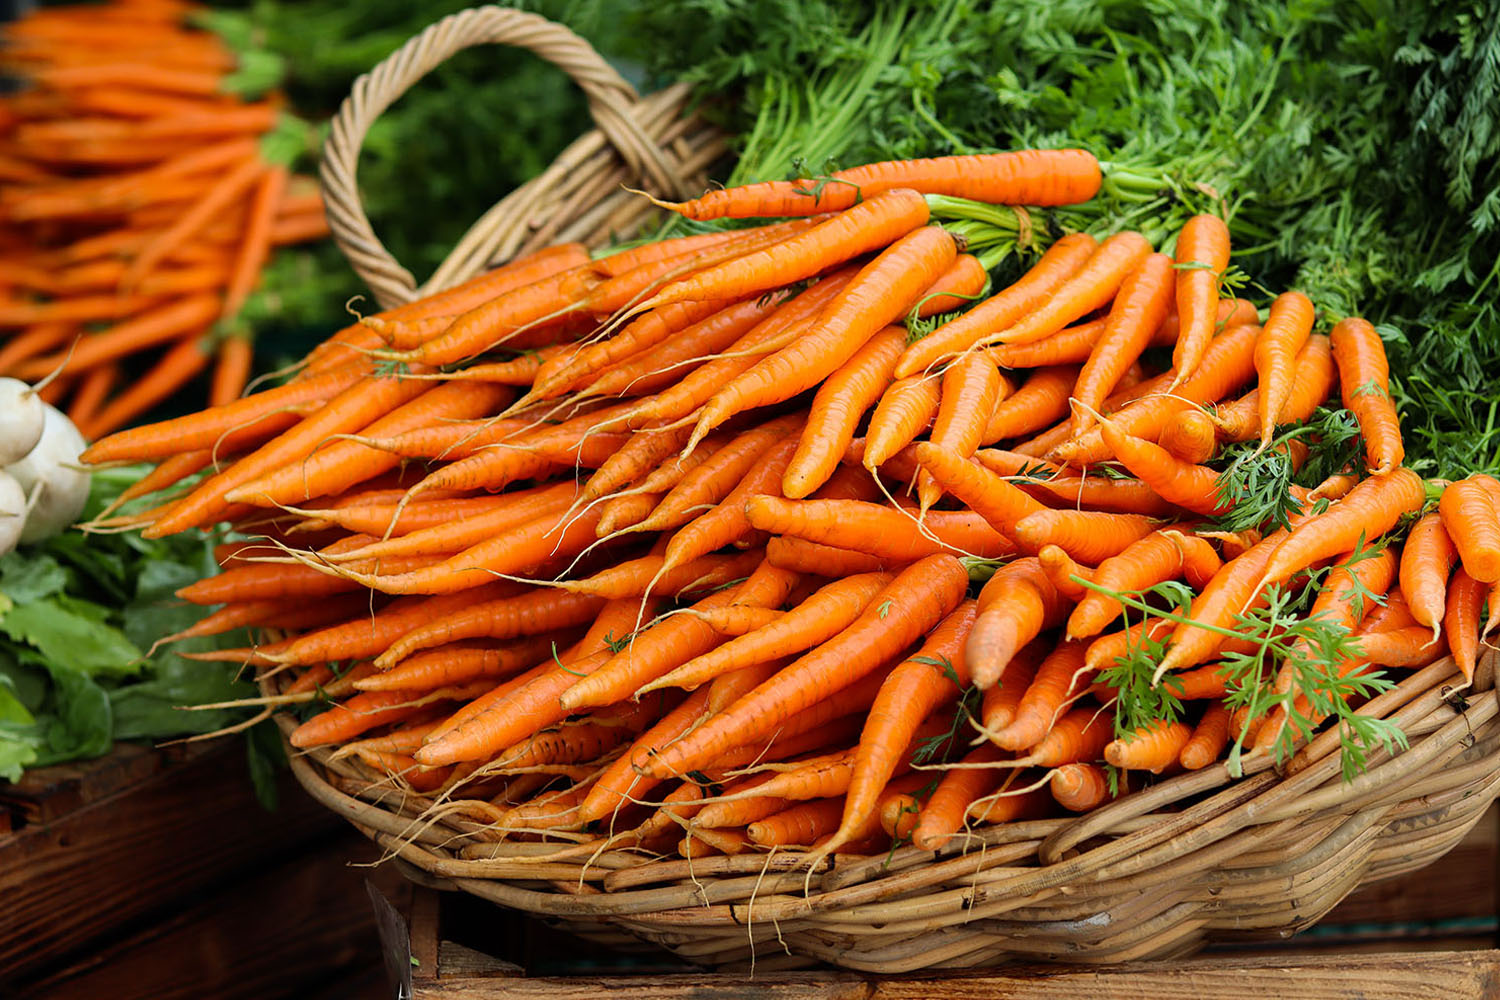 Crunchy carrots for sale